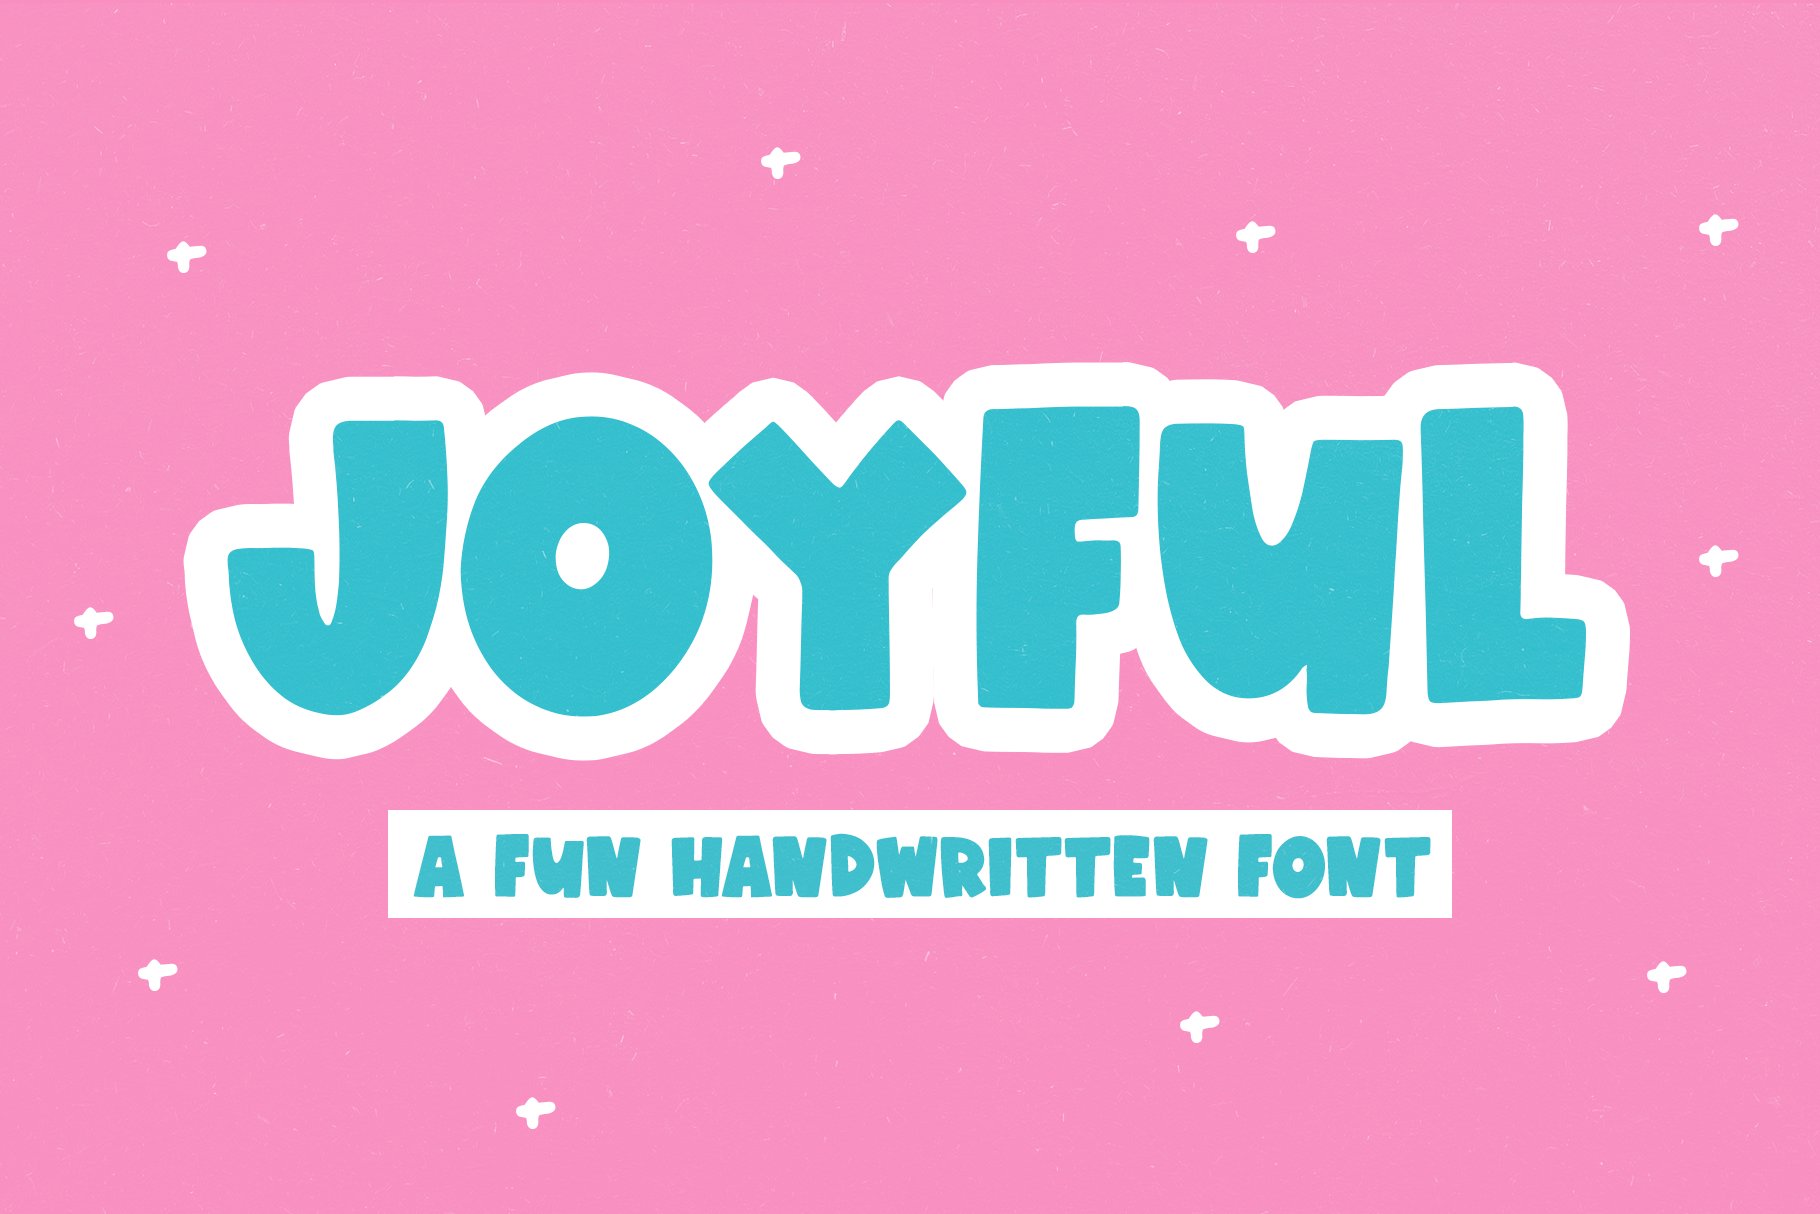 Joyful | Fun Handwritten Font cover image.